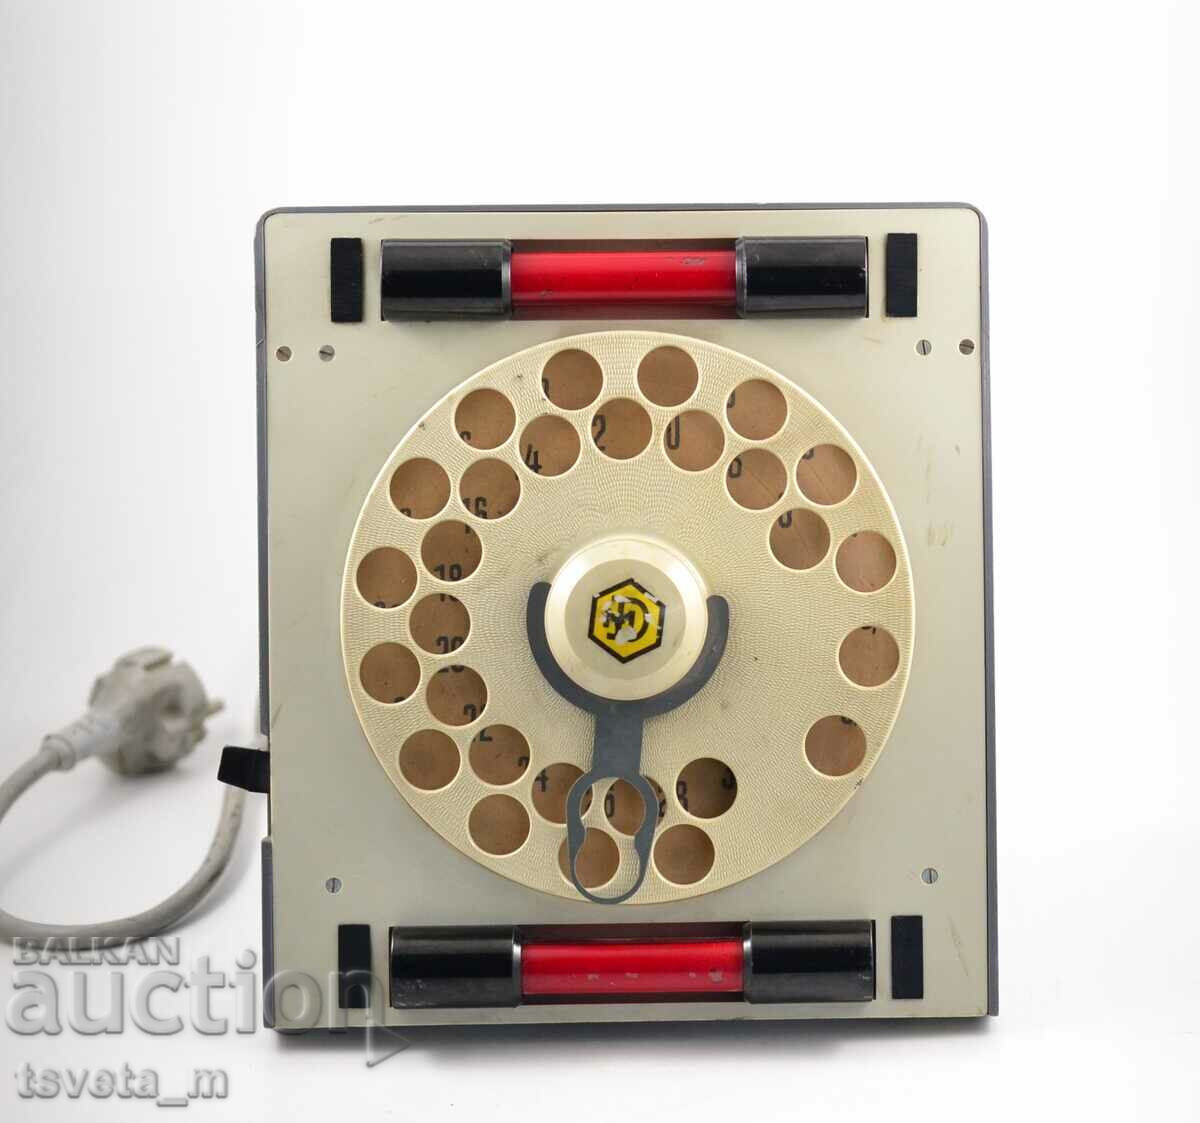 Clock-switch "Duchke" mechanical for photo copying